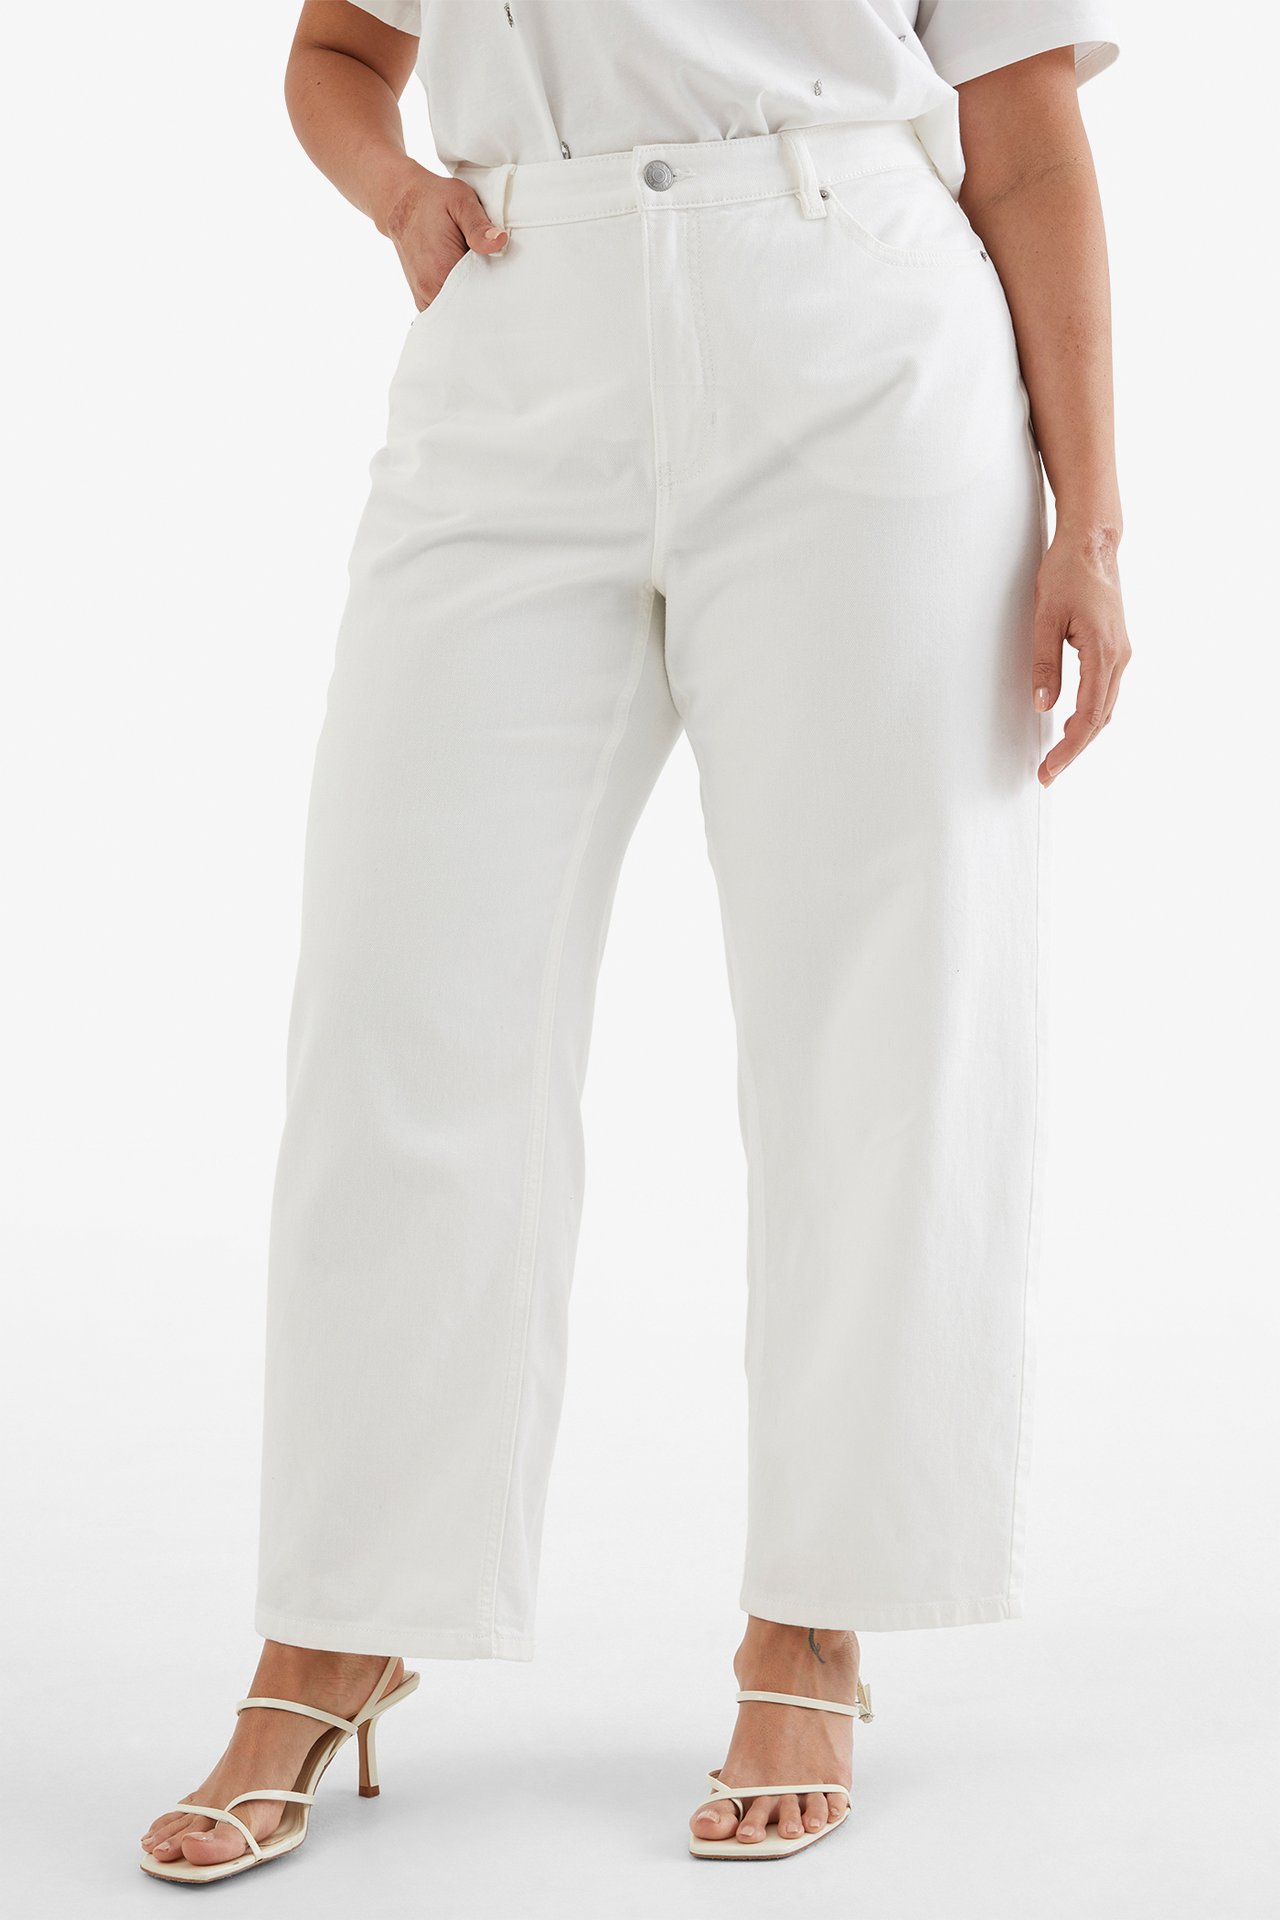 Ariel straght twill jeans - Luonnonvalkoinen - 173cm / Storlek: 50 - 2